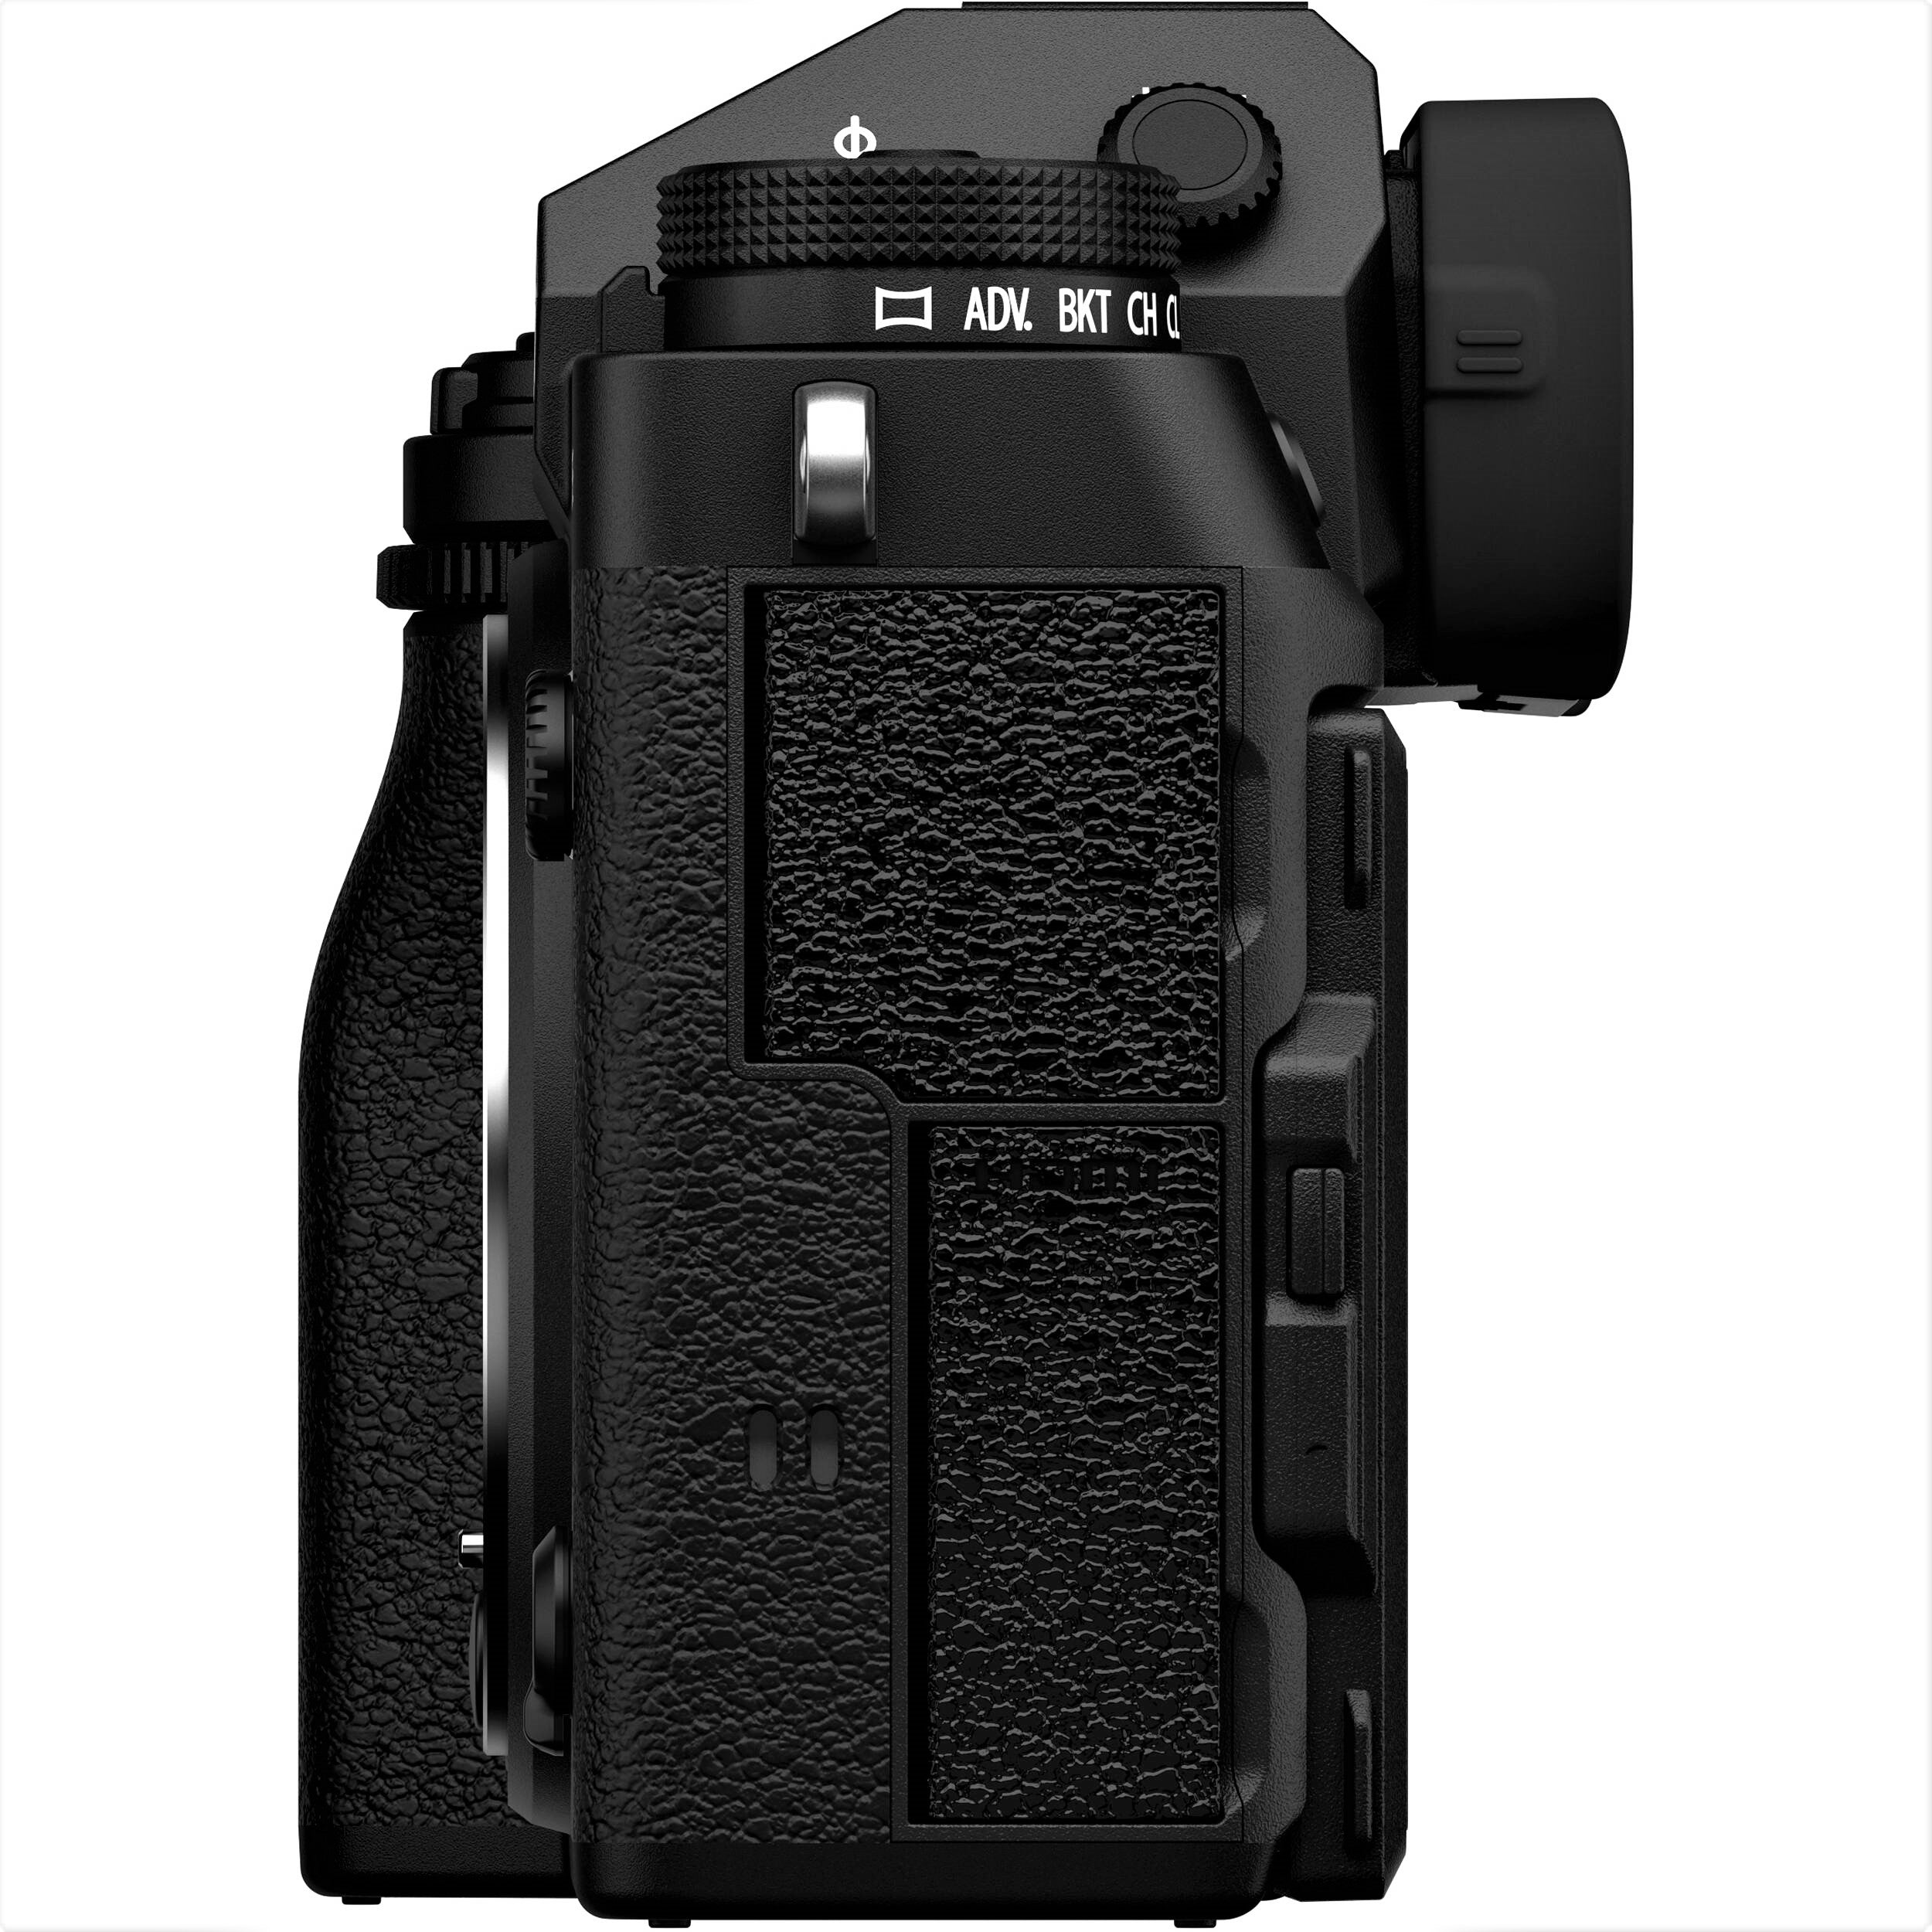 Fujifilm X-T5 Mirrorless Camera with 16-80mm Lens (Black) - Side View